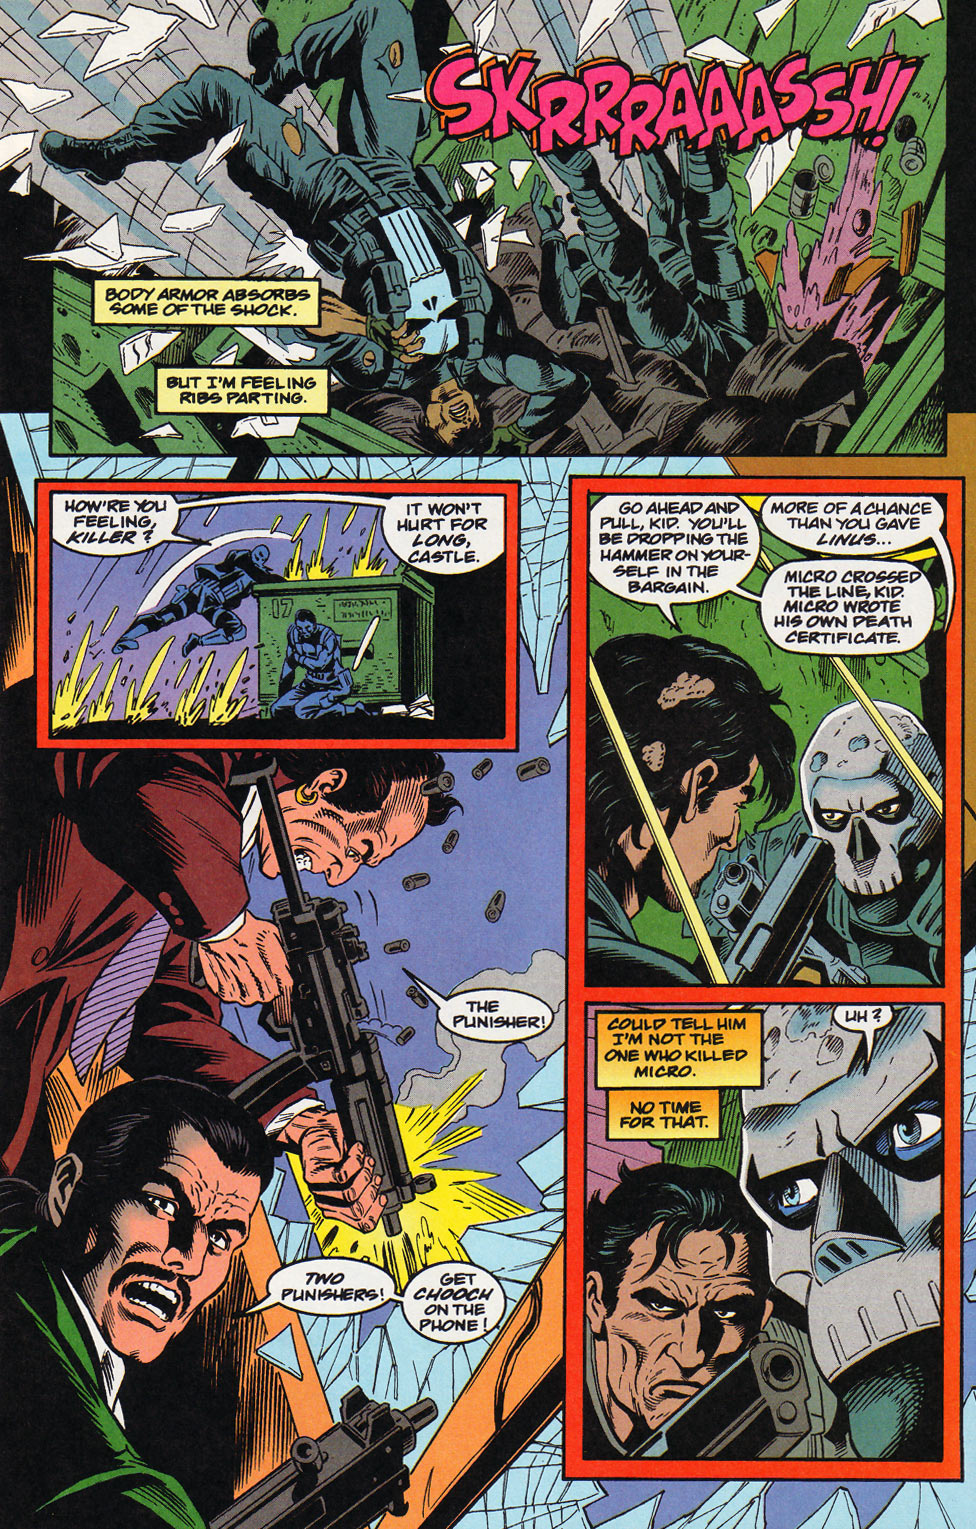 THE PUNISHER: WAR ZONE: Dec #34 by Punisher: War Zone: (1994) Comic